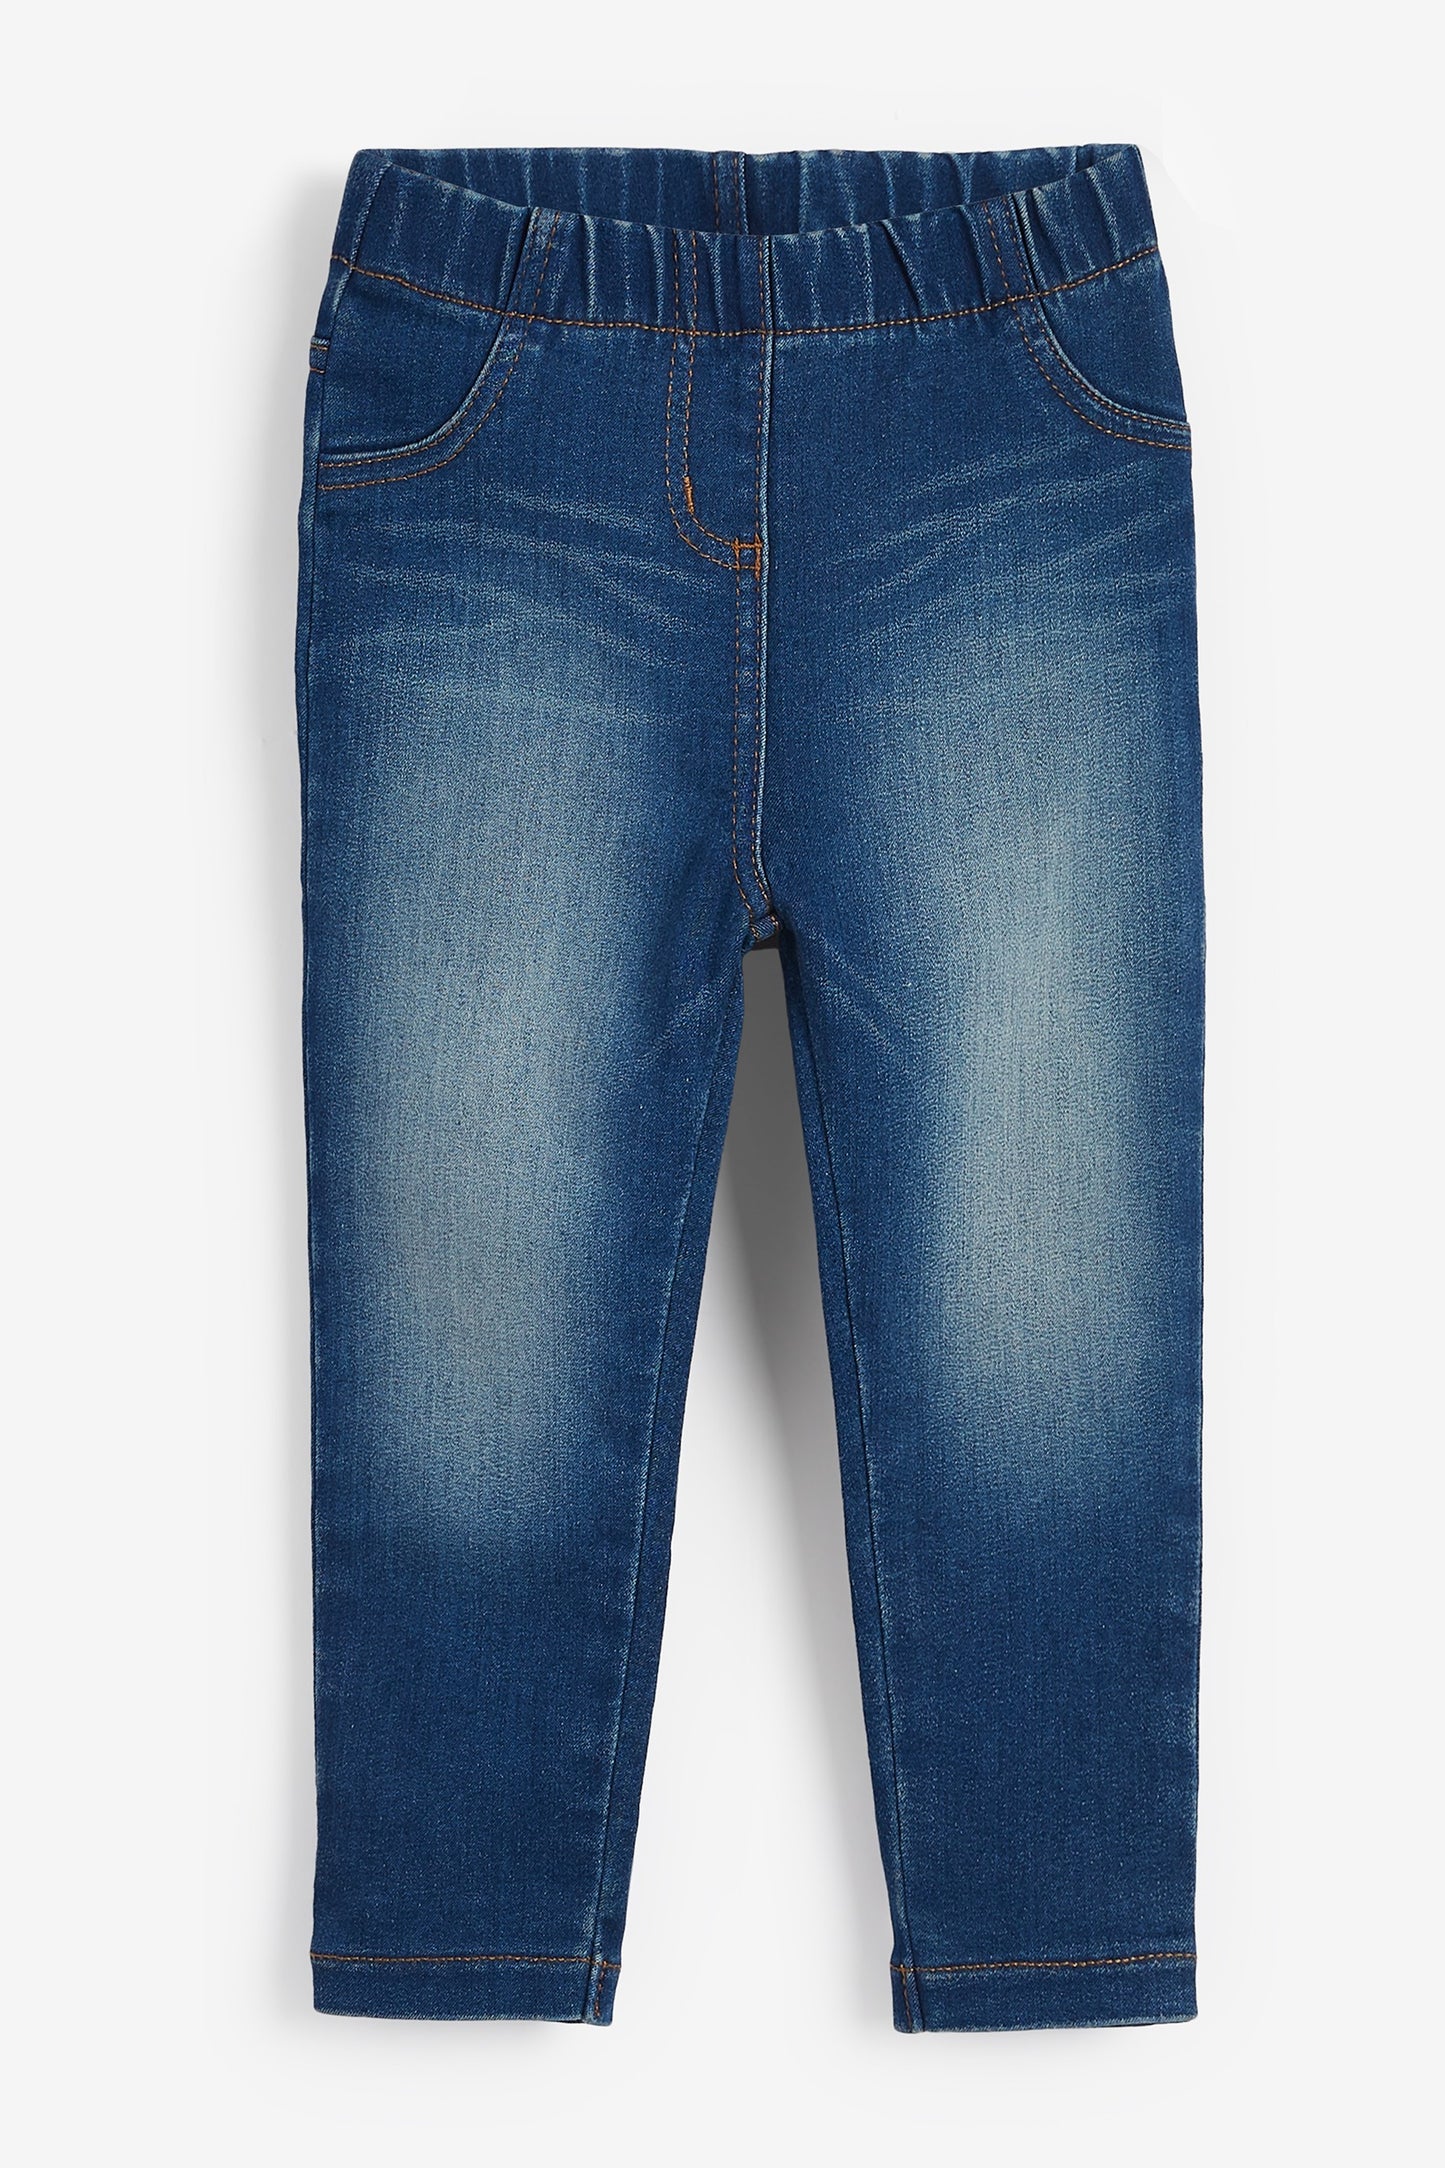 Calça jeans - Kit com 2